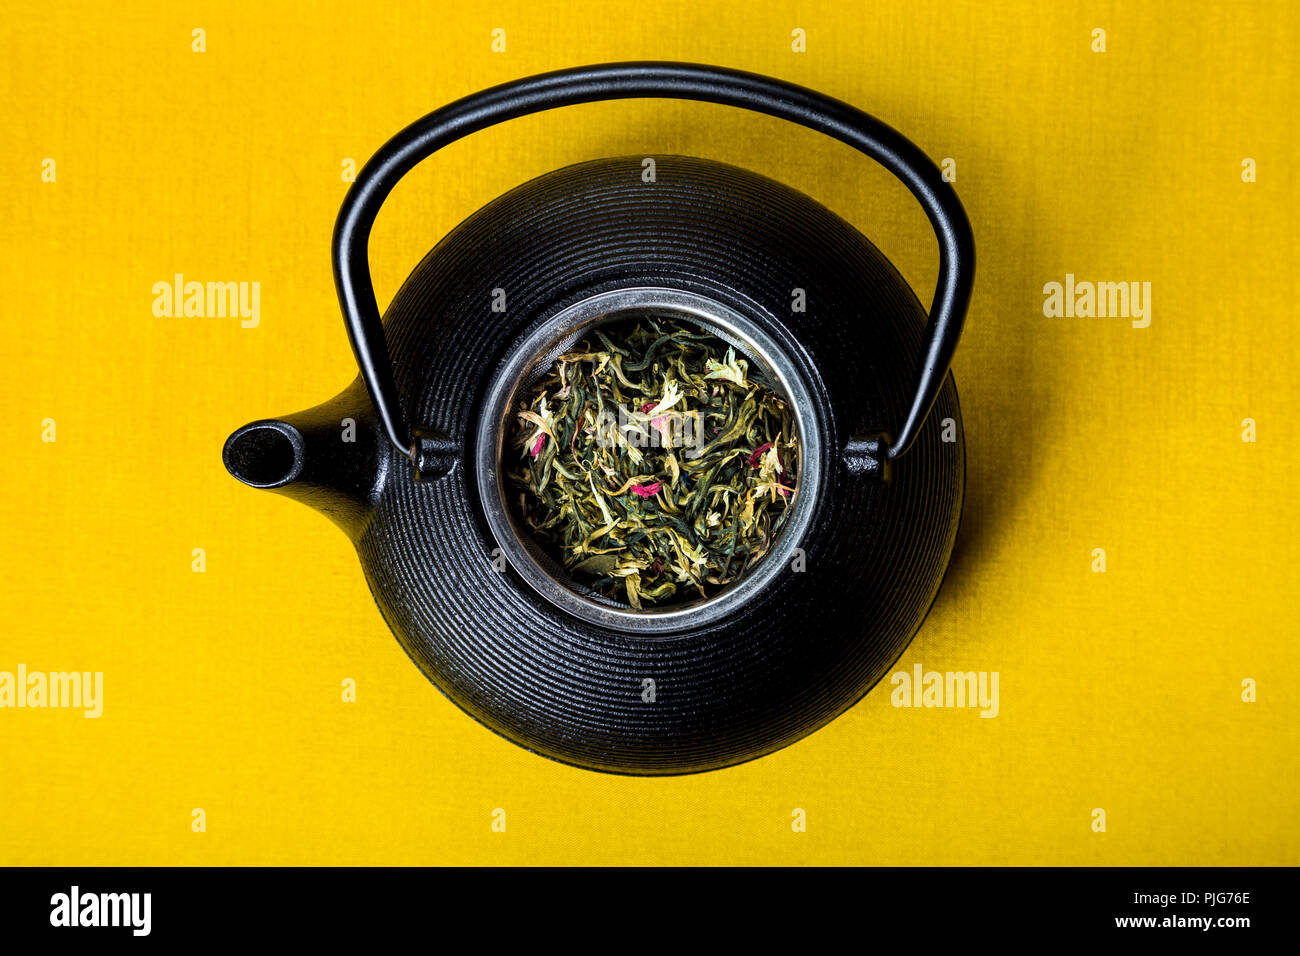 Cast Iron teapot (tetsubin) with loose leaf white tea against yellow background Stock Photo